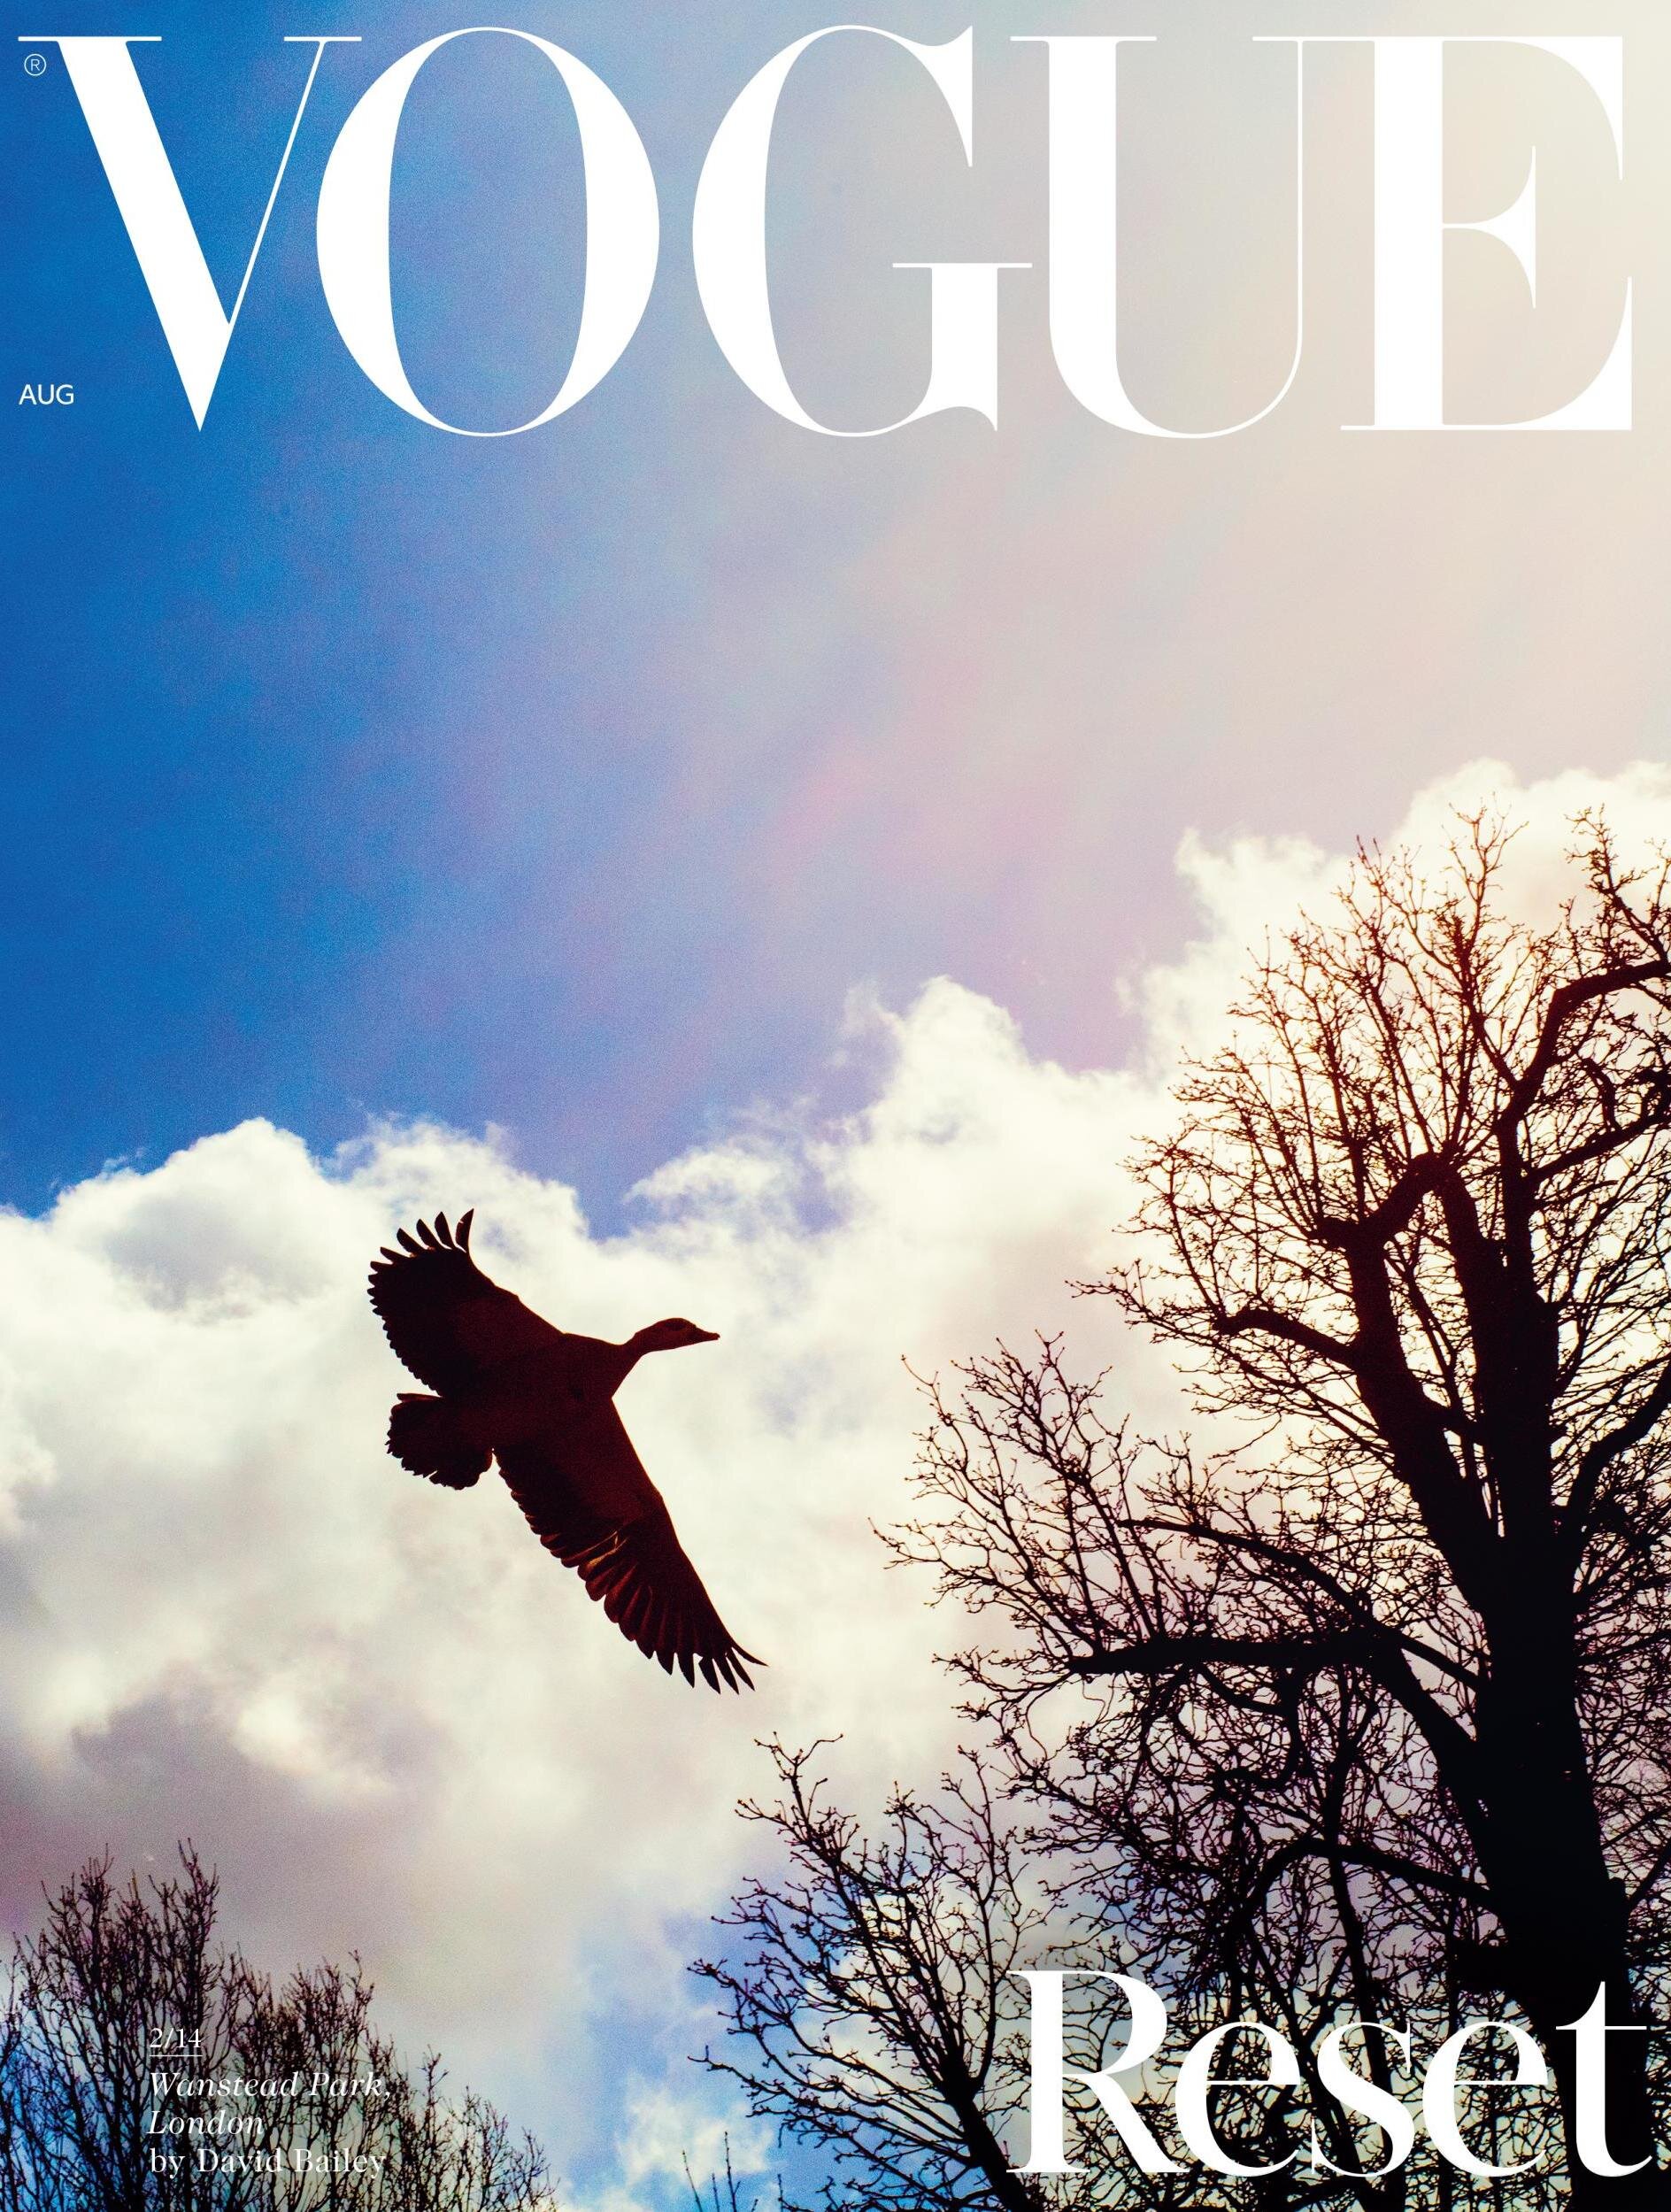 David Bailey  British Vogue Aug 2020 Reset